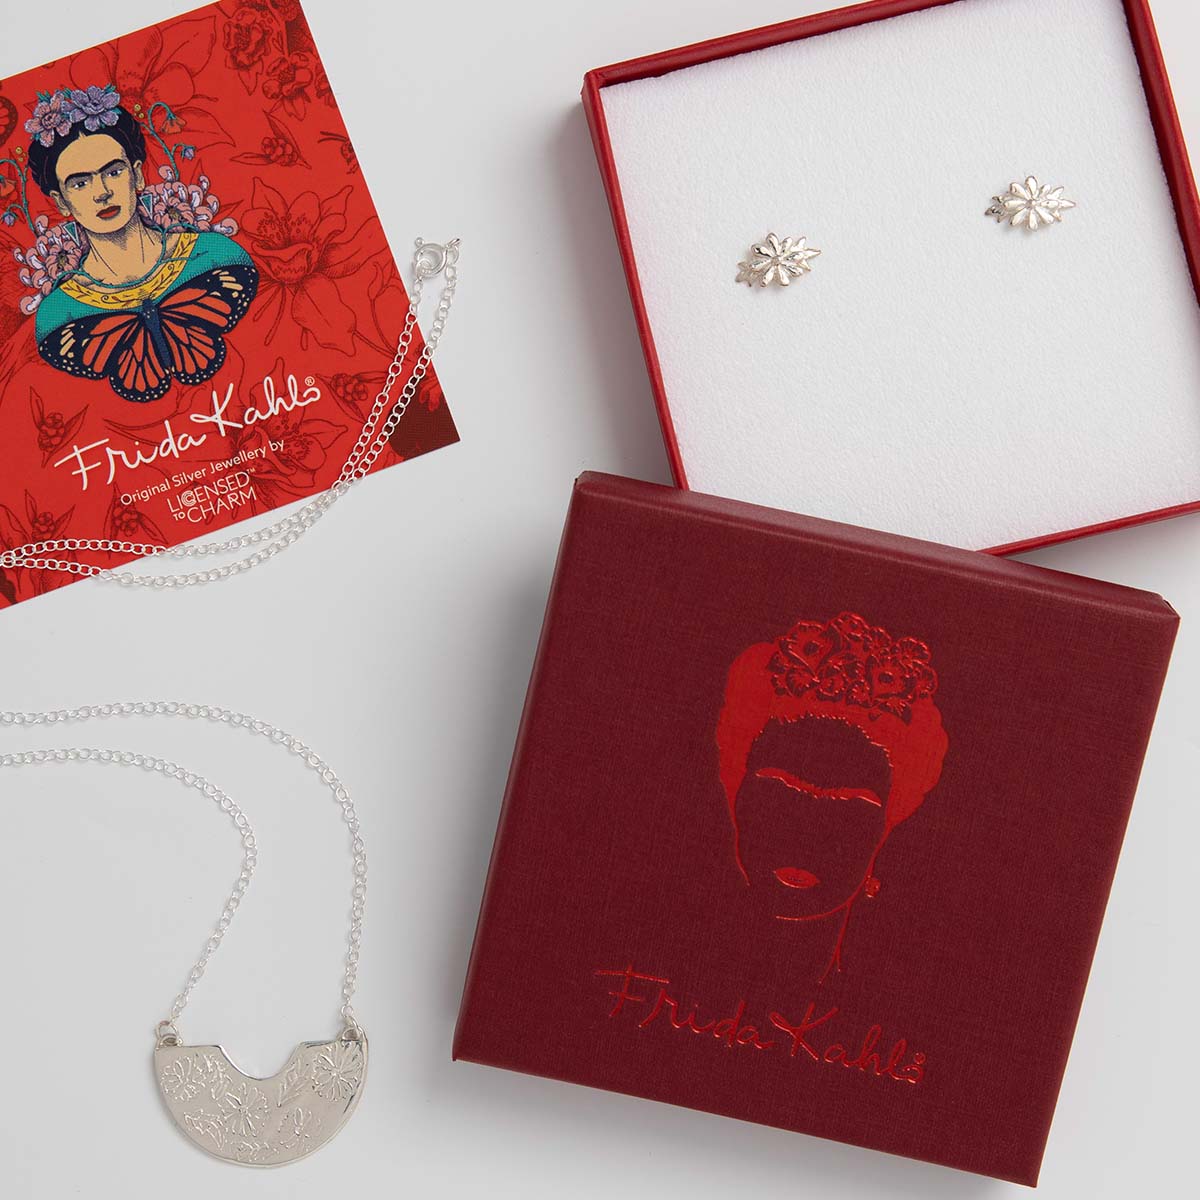 Frida Kahlo Silver Marigold Necklace & Earring Gift Set